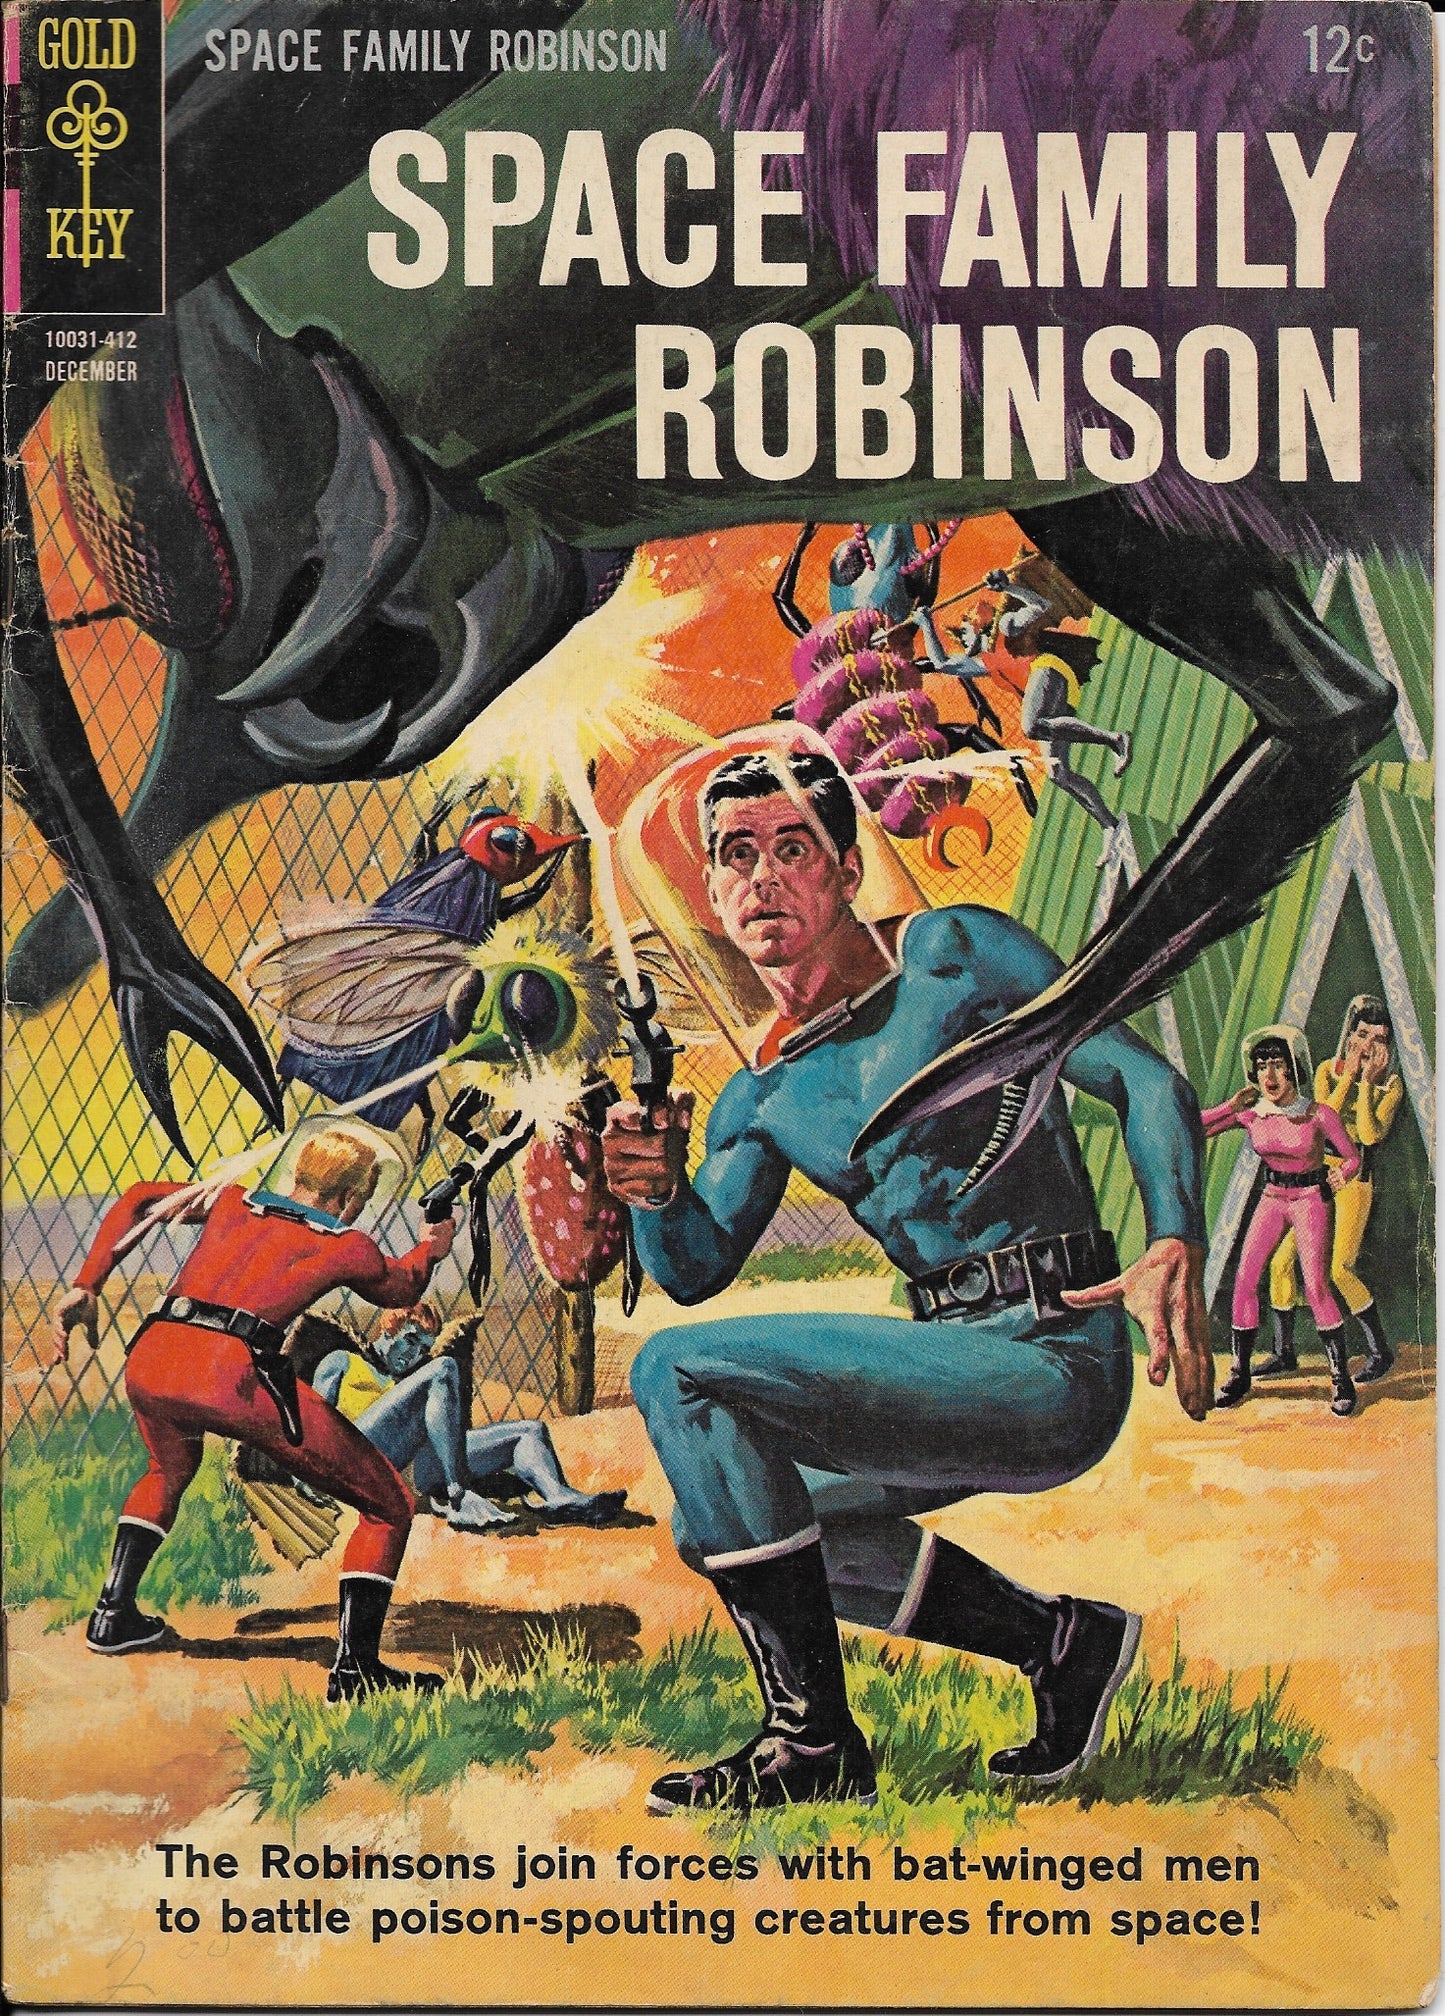 Space Family Robinson No. 11, Gold Key Comics, December 1964